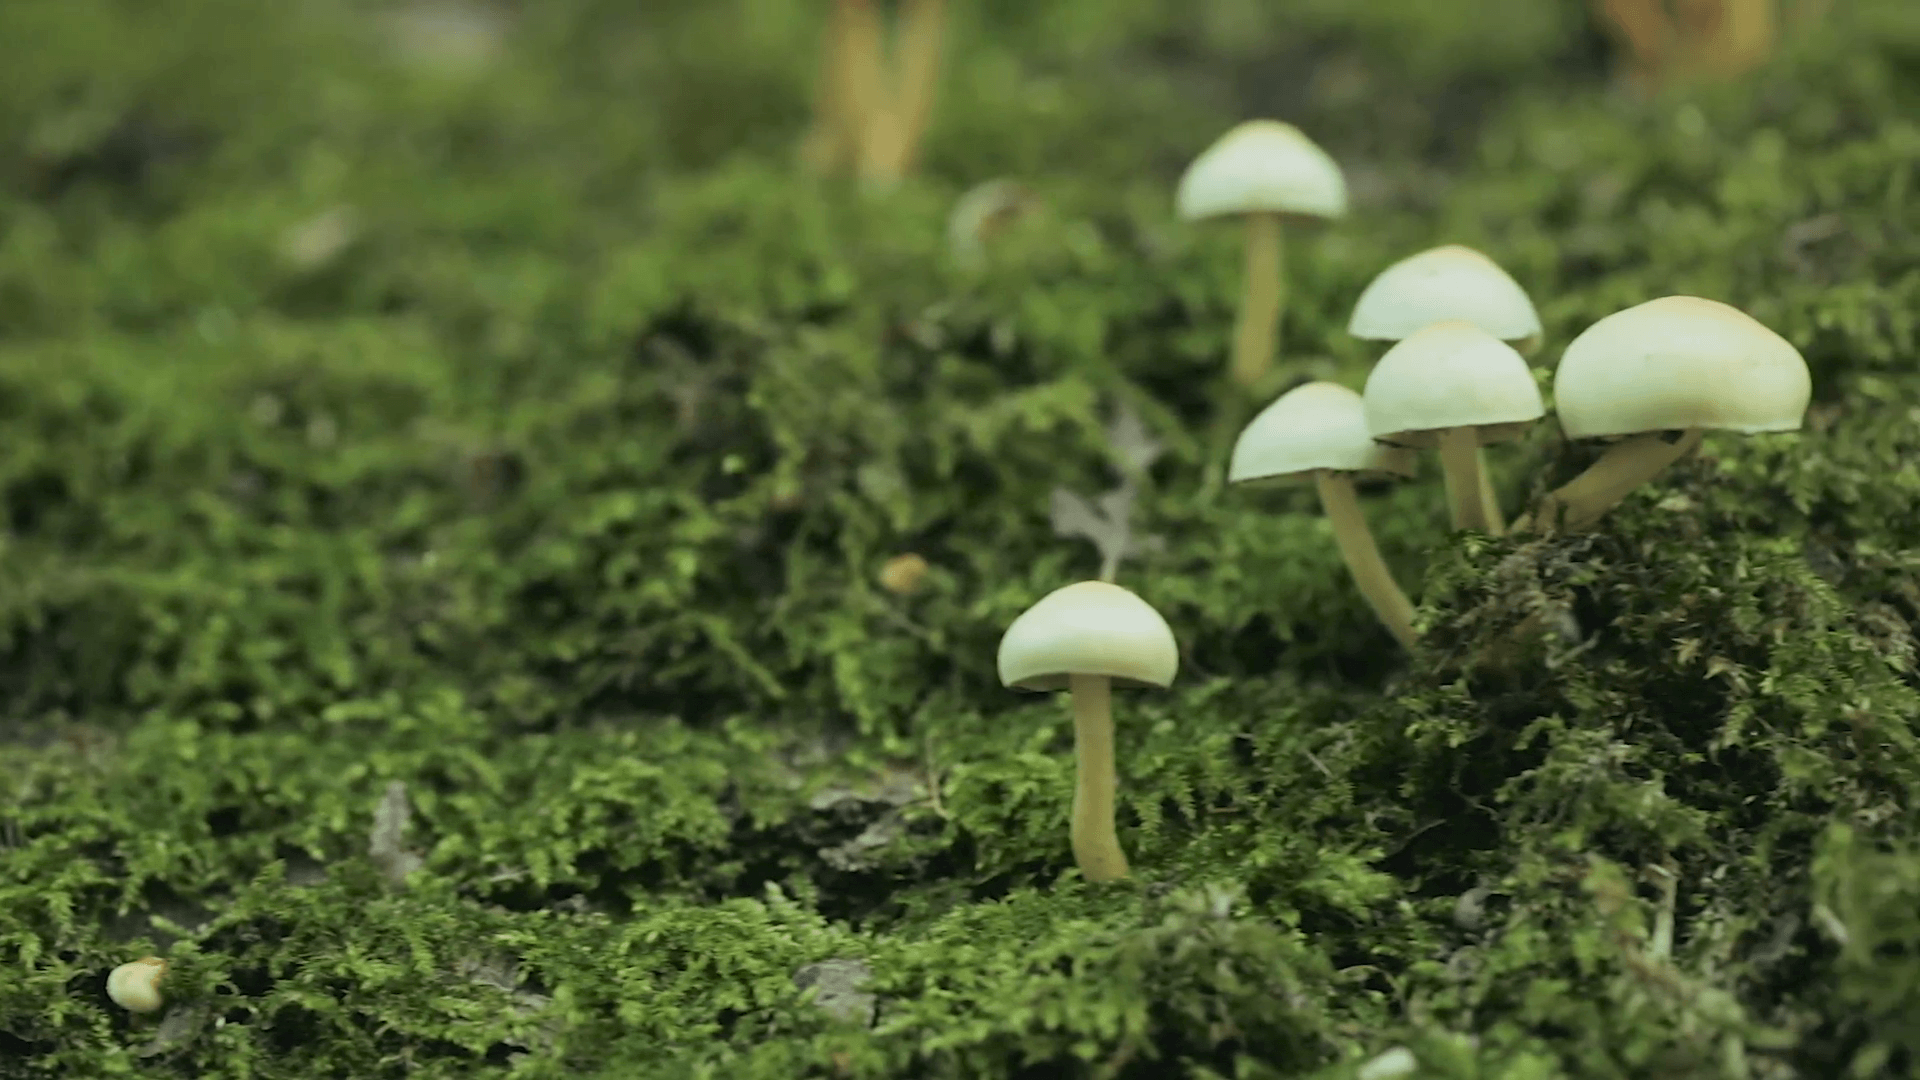 Small mushrooms grow on green moss over a fallen tree log in a wet